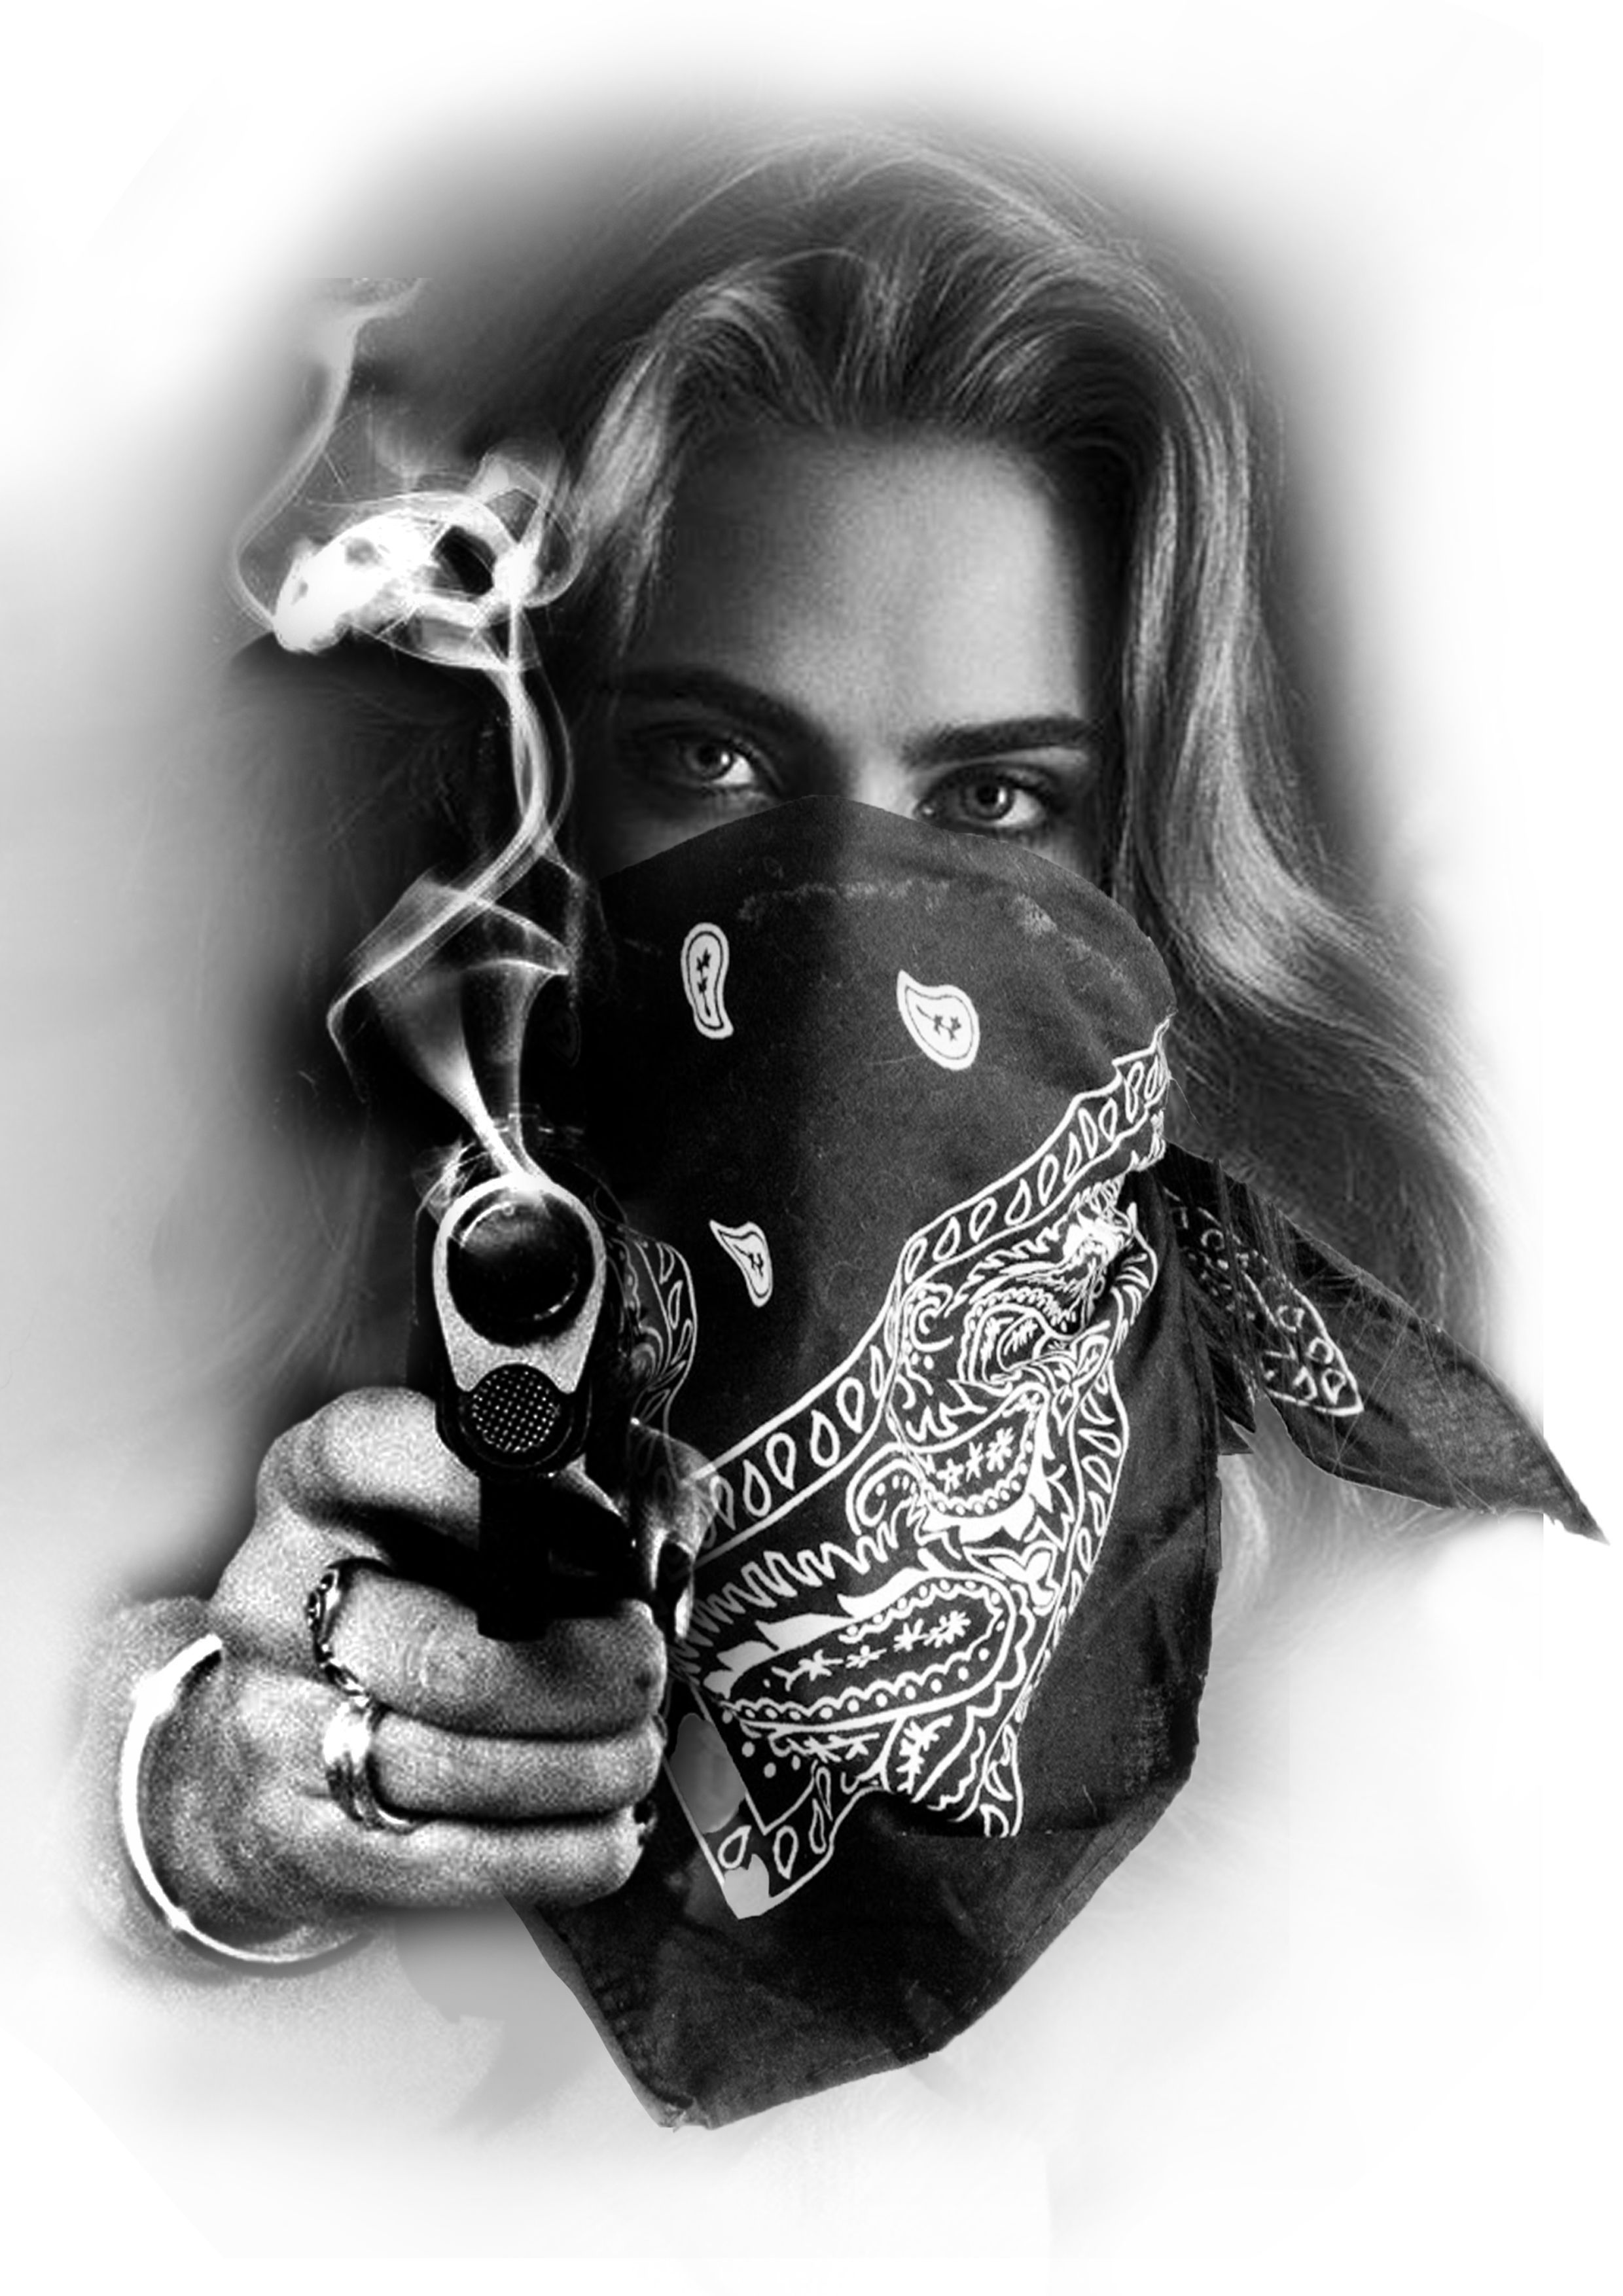 Аватарки с пистолетом. Девушка бандитка. Девушка в маске с пистолетом. Девушки гангстеры в банданах.